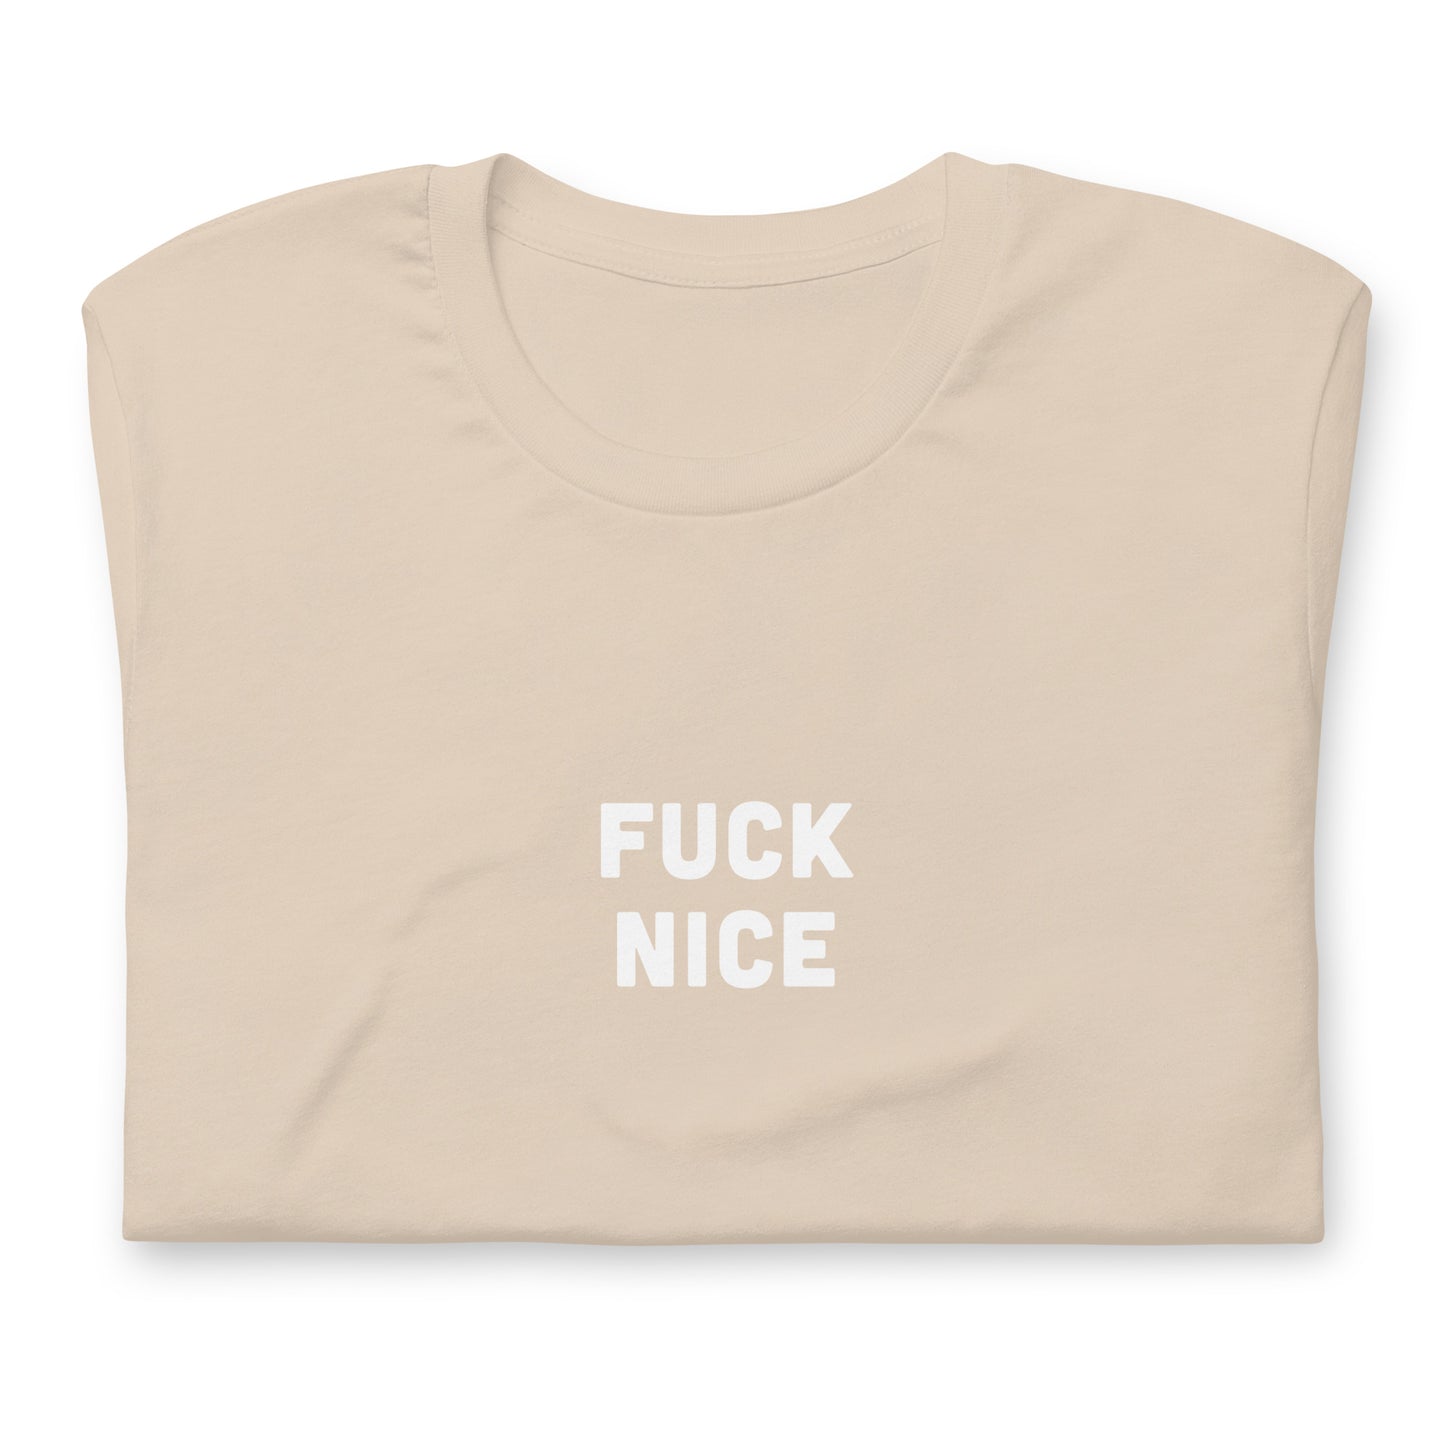 Fuck Nice T-Shirt Size L Color Asphalt